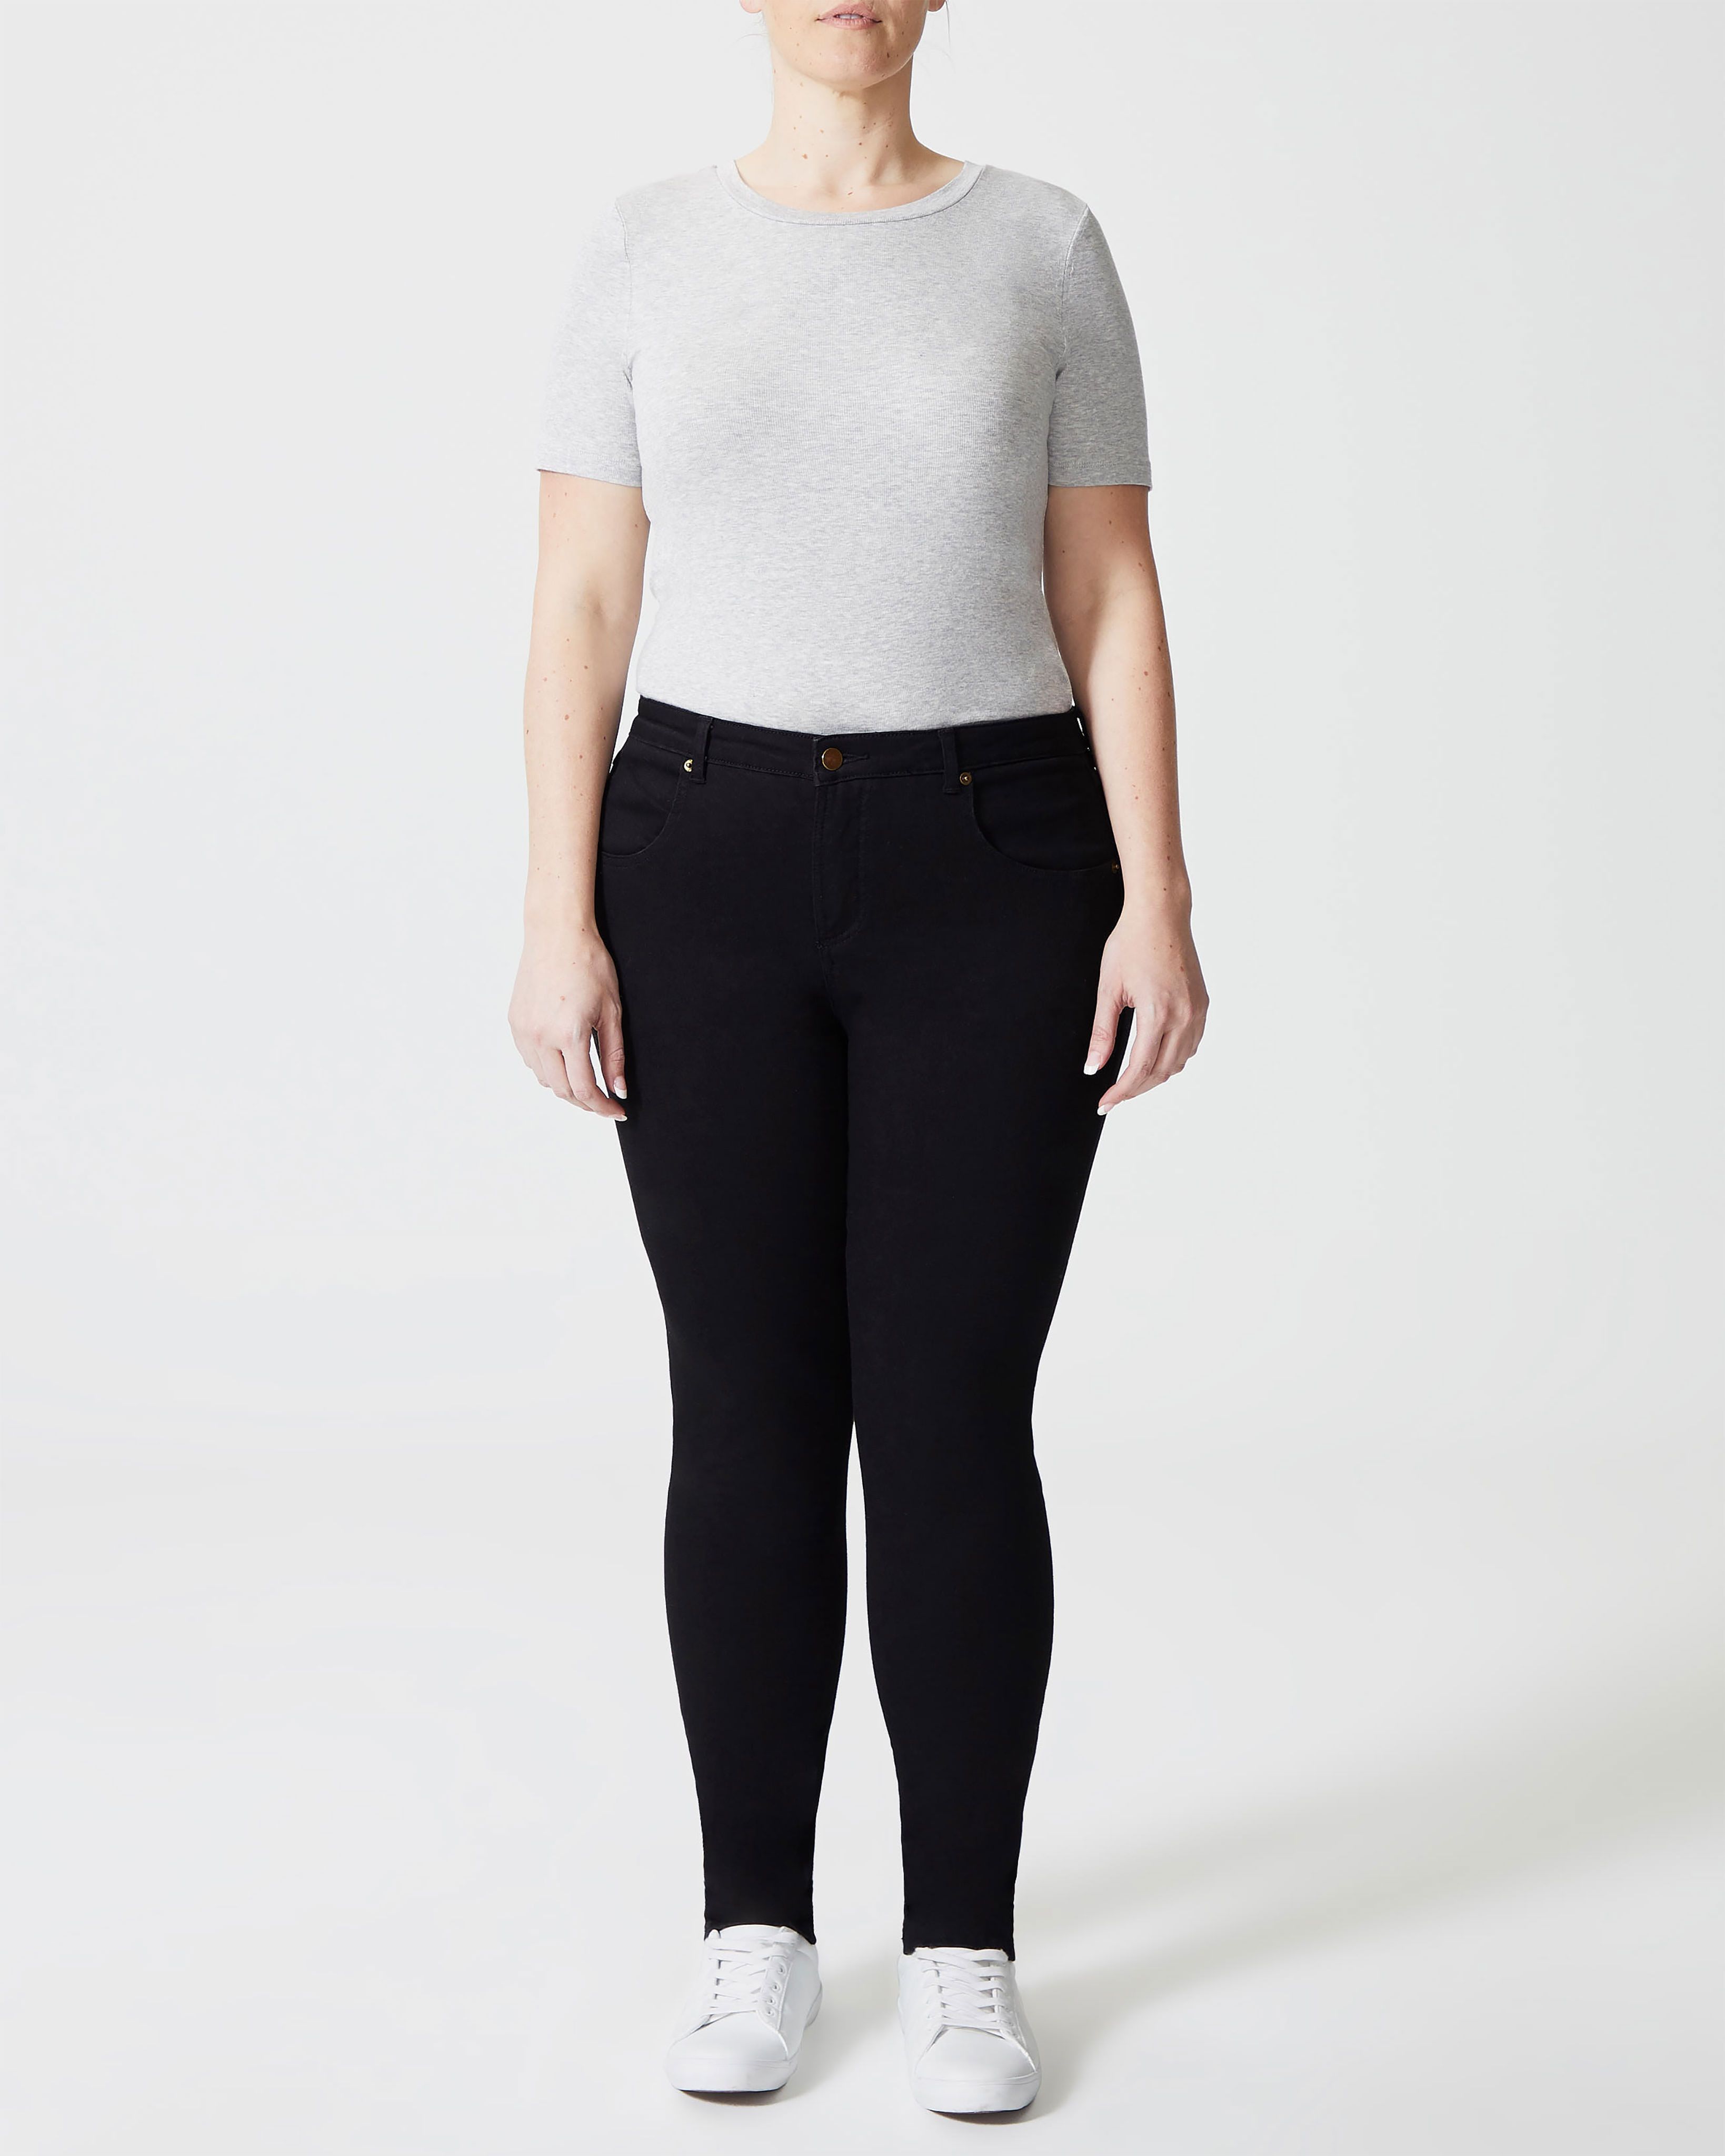 Seine Mid Rise Skinny Jeans 32 Inch - Black | Universal Standard